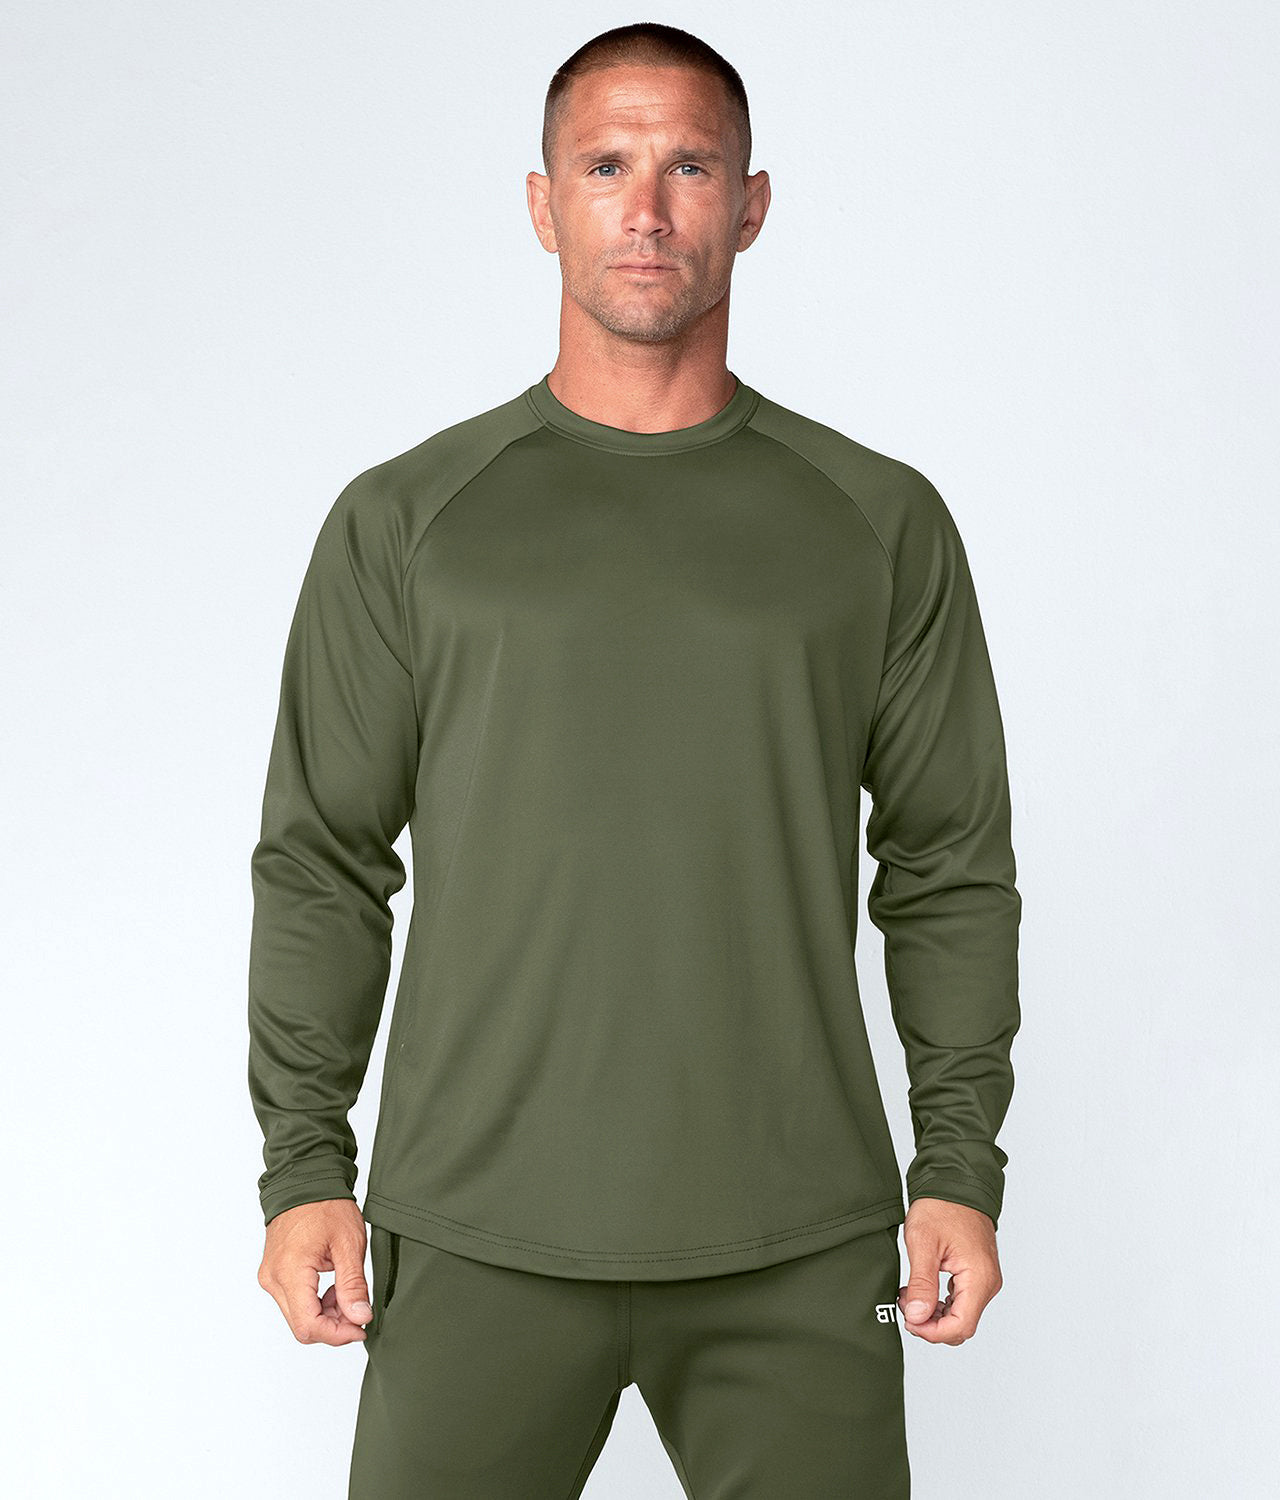 AE, Statement Ribbed Long Sleeves Tee - Kombu green, Gym T-shirts